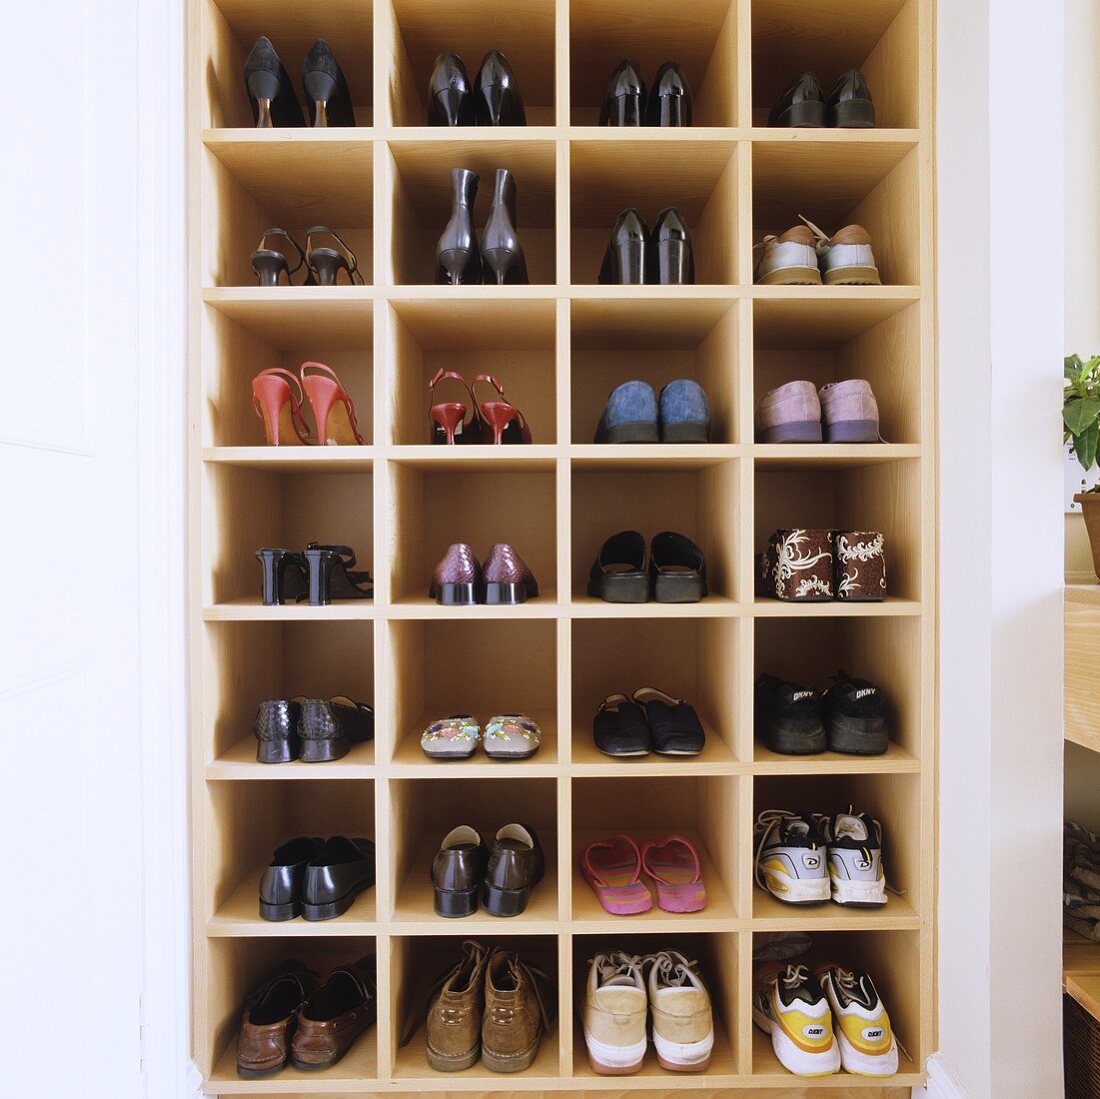 A shoe shelf built into a wall niche